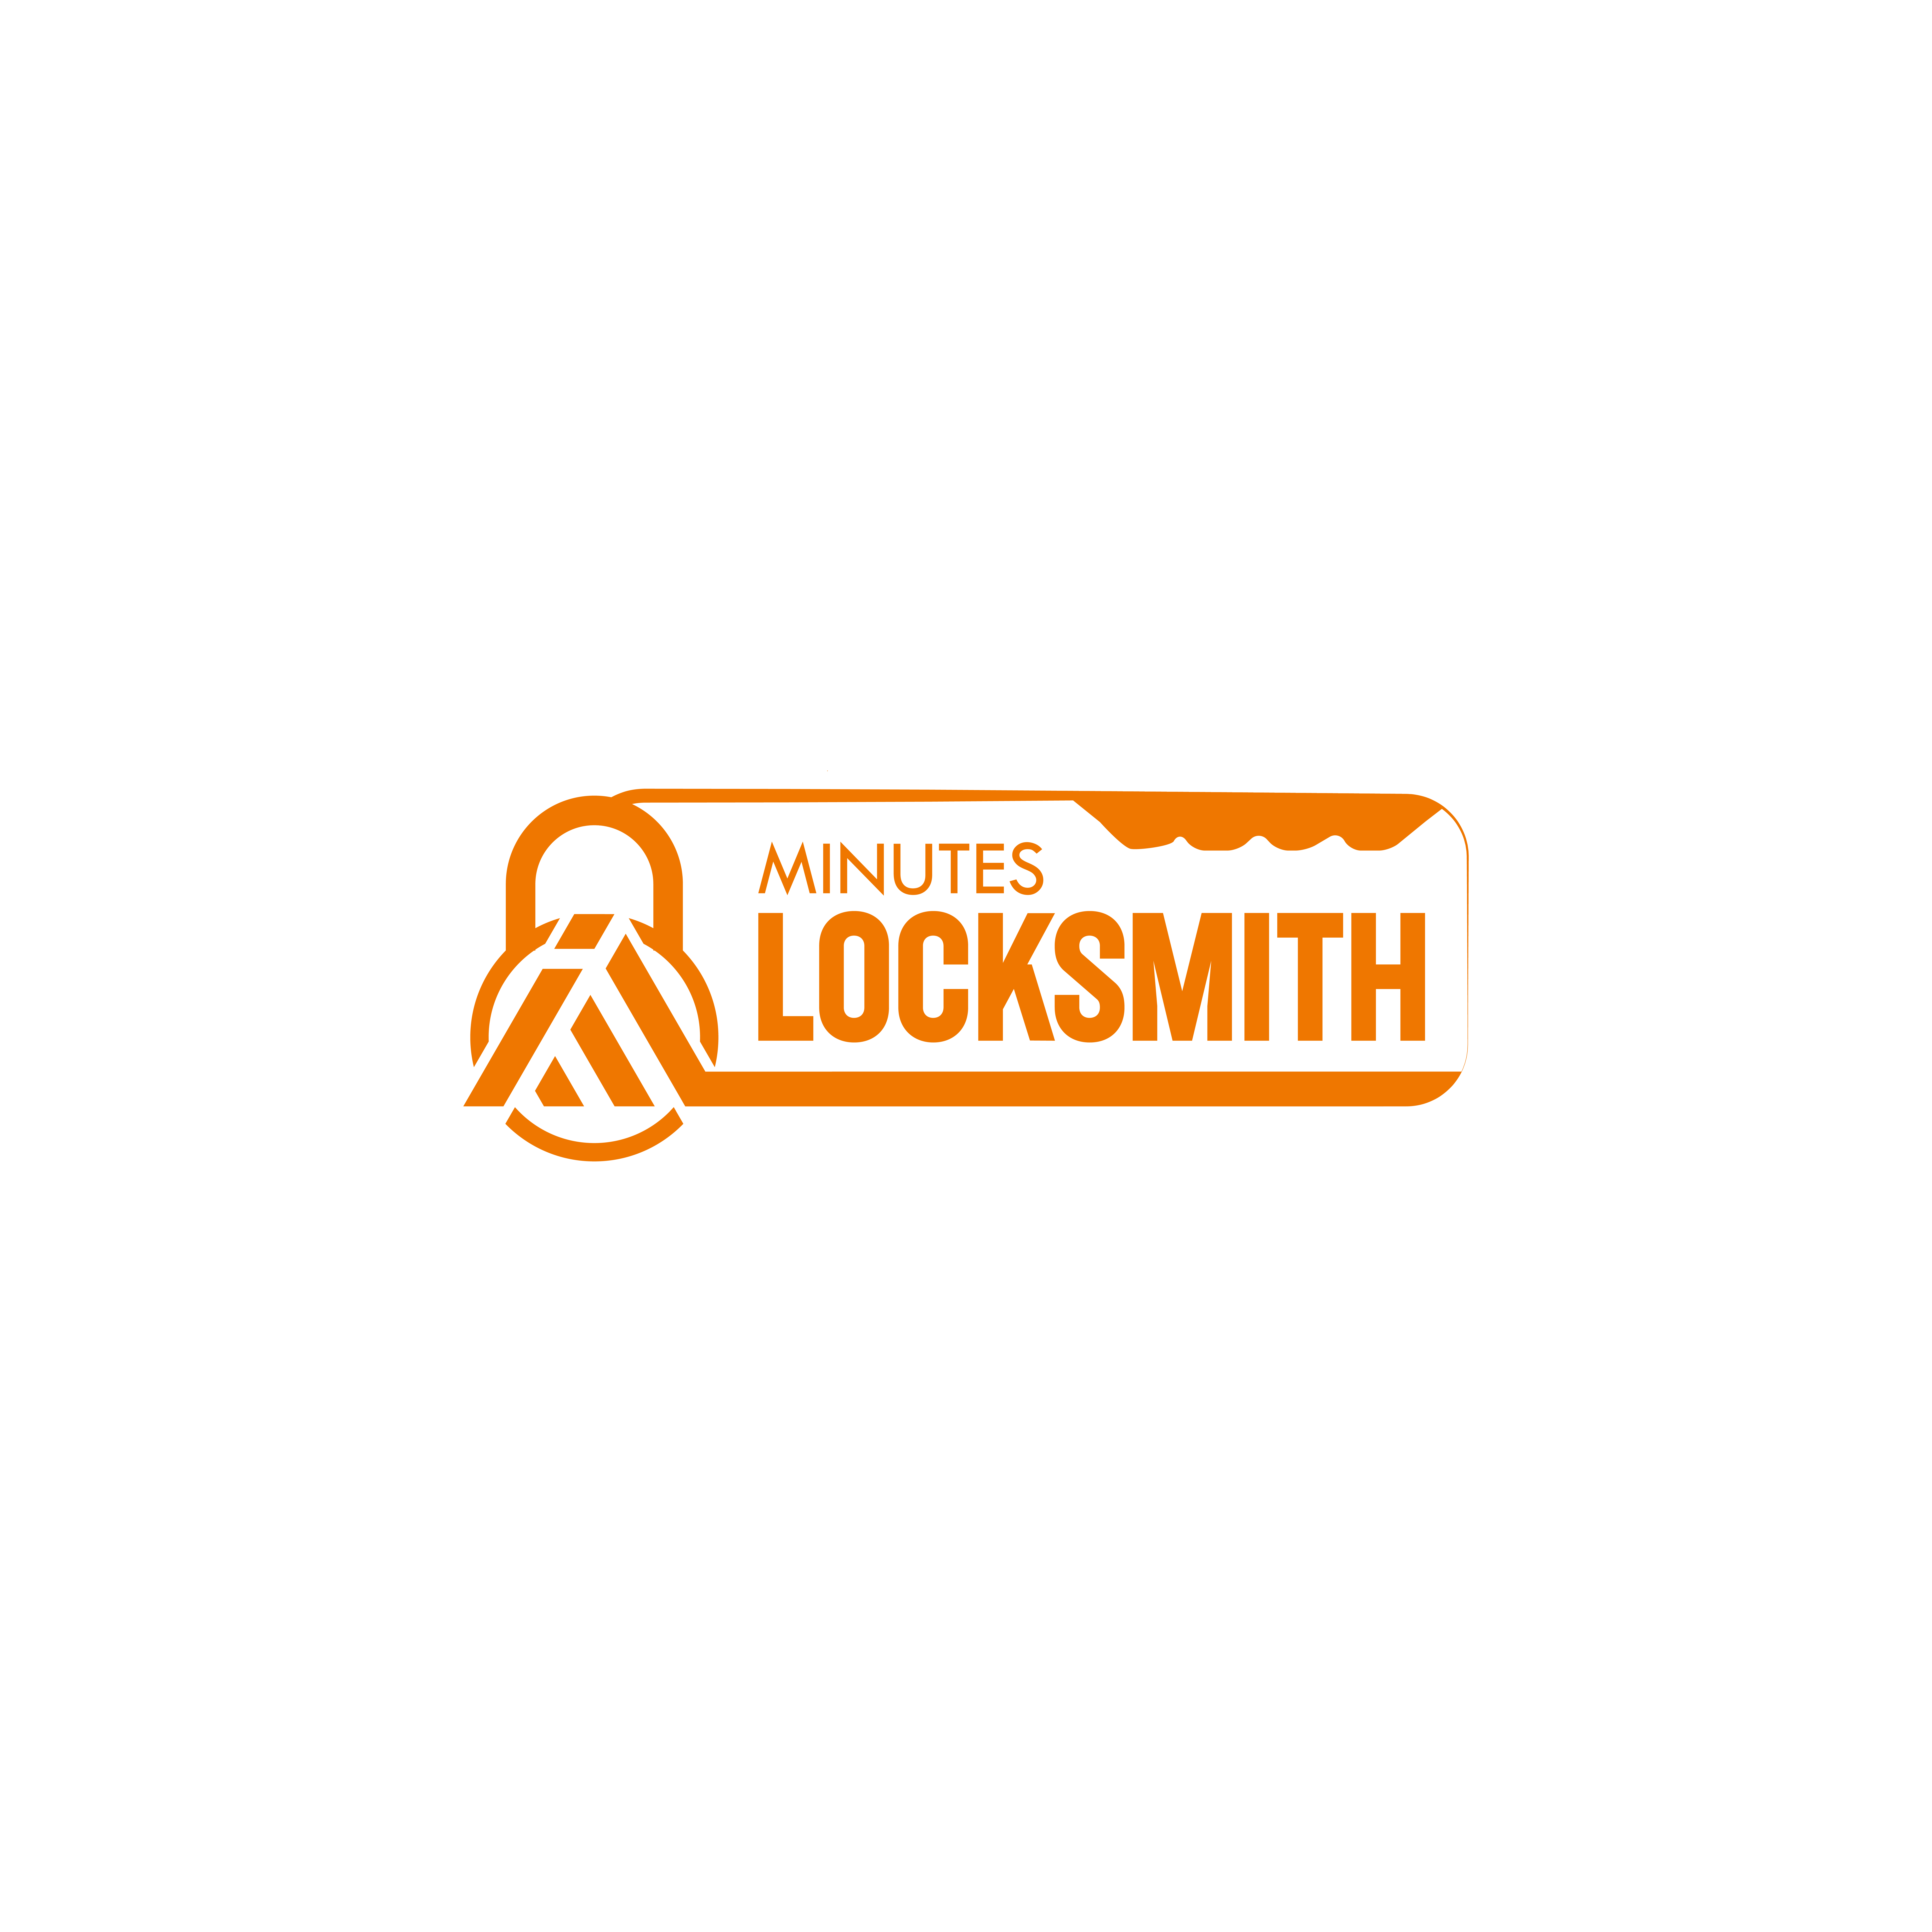 Minutes Locksmith logo-07